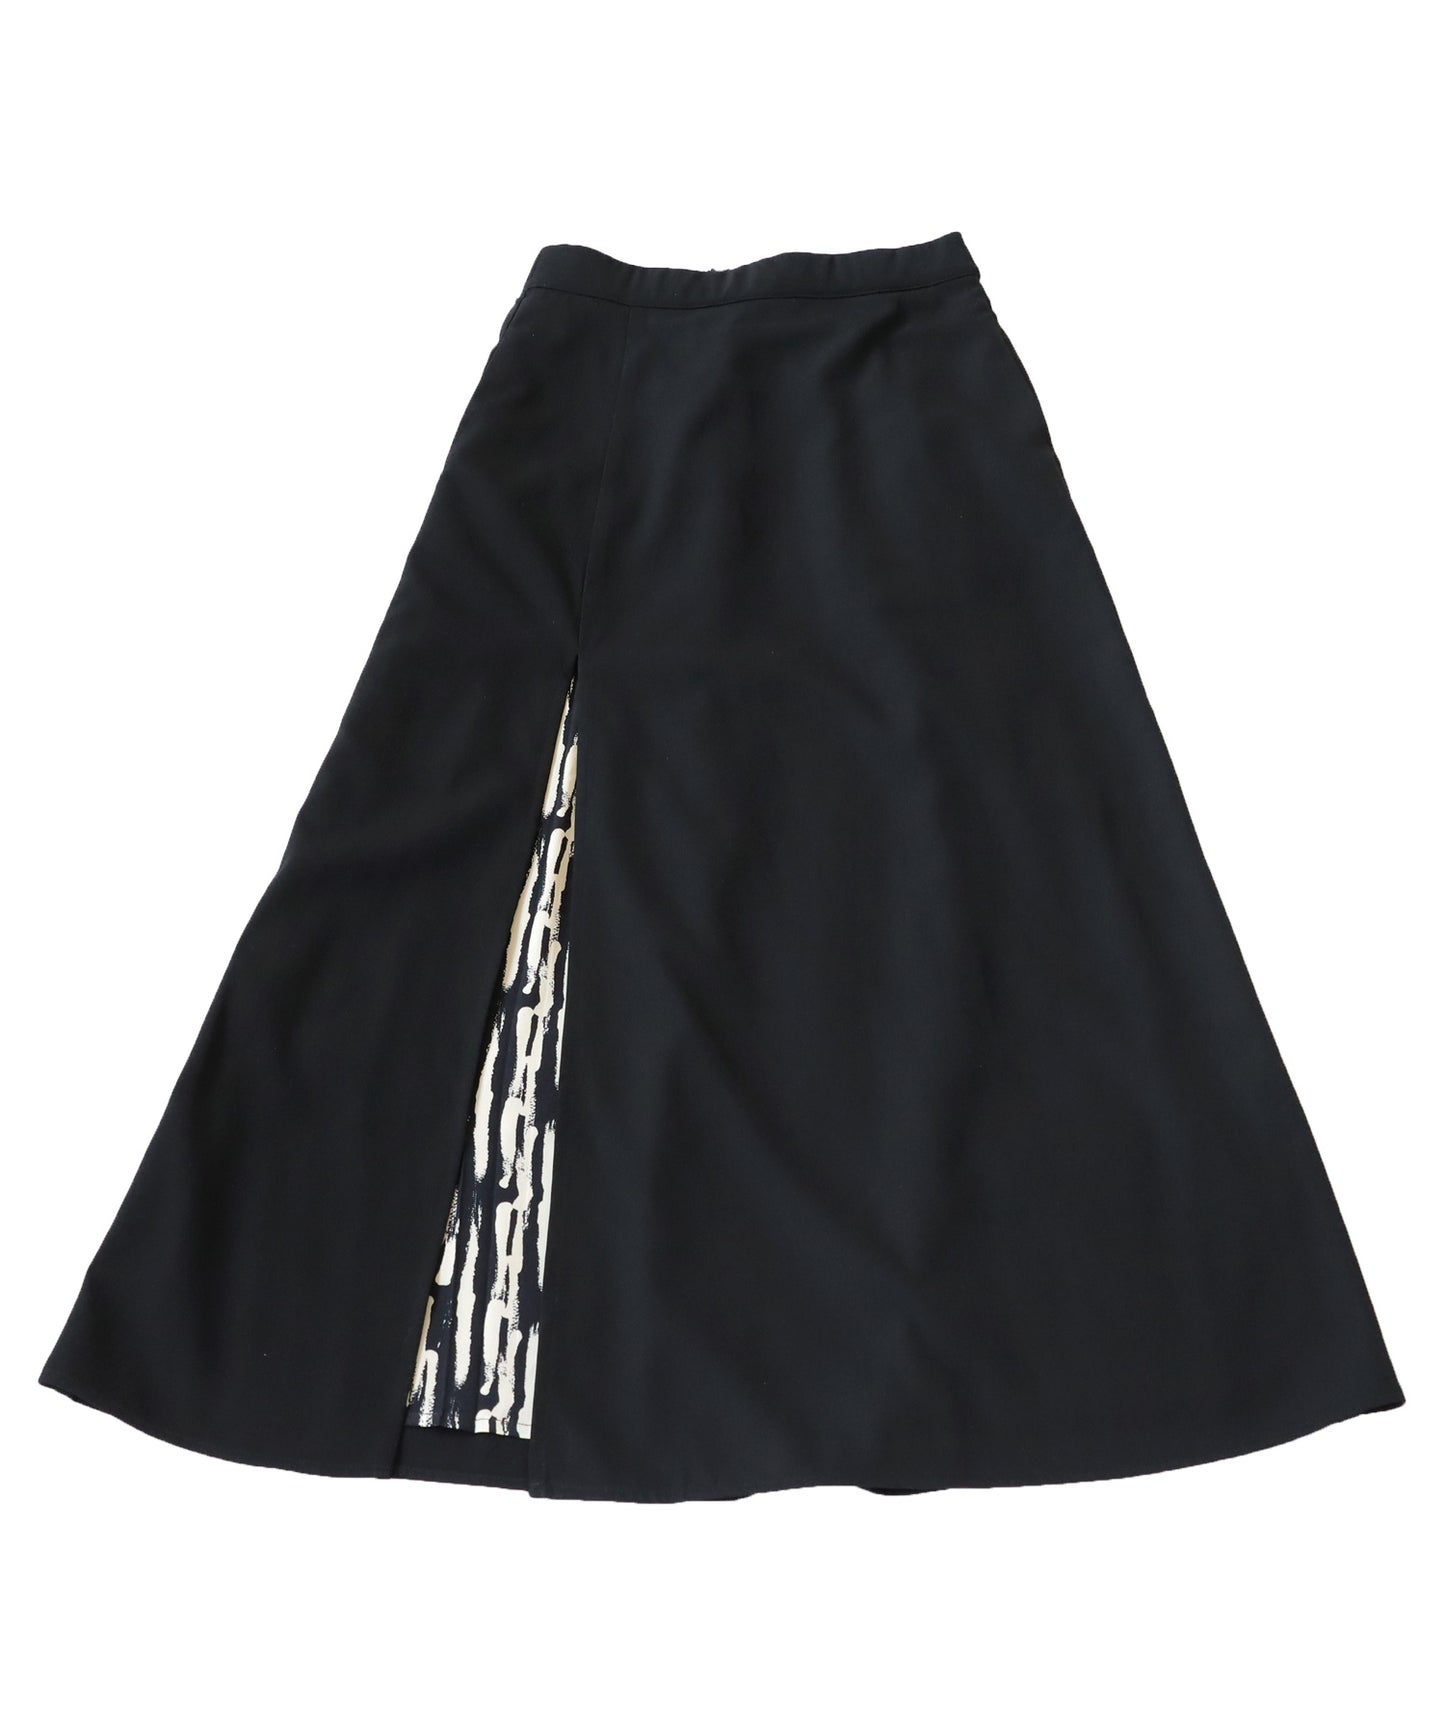 Slit Design Skirt Ladies